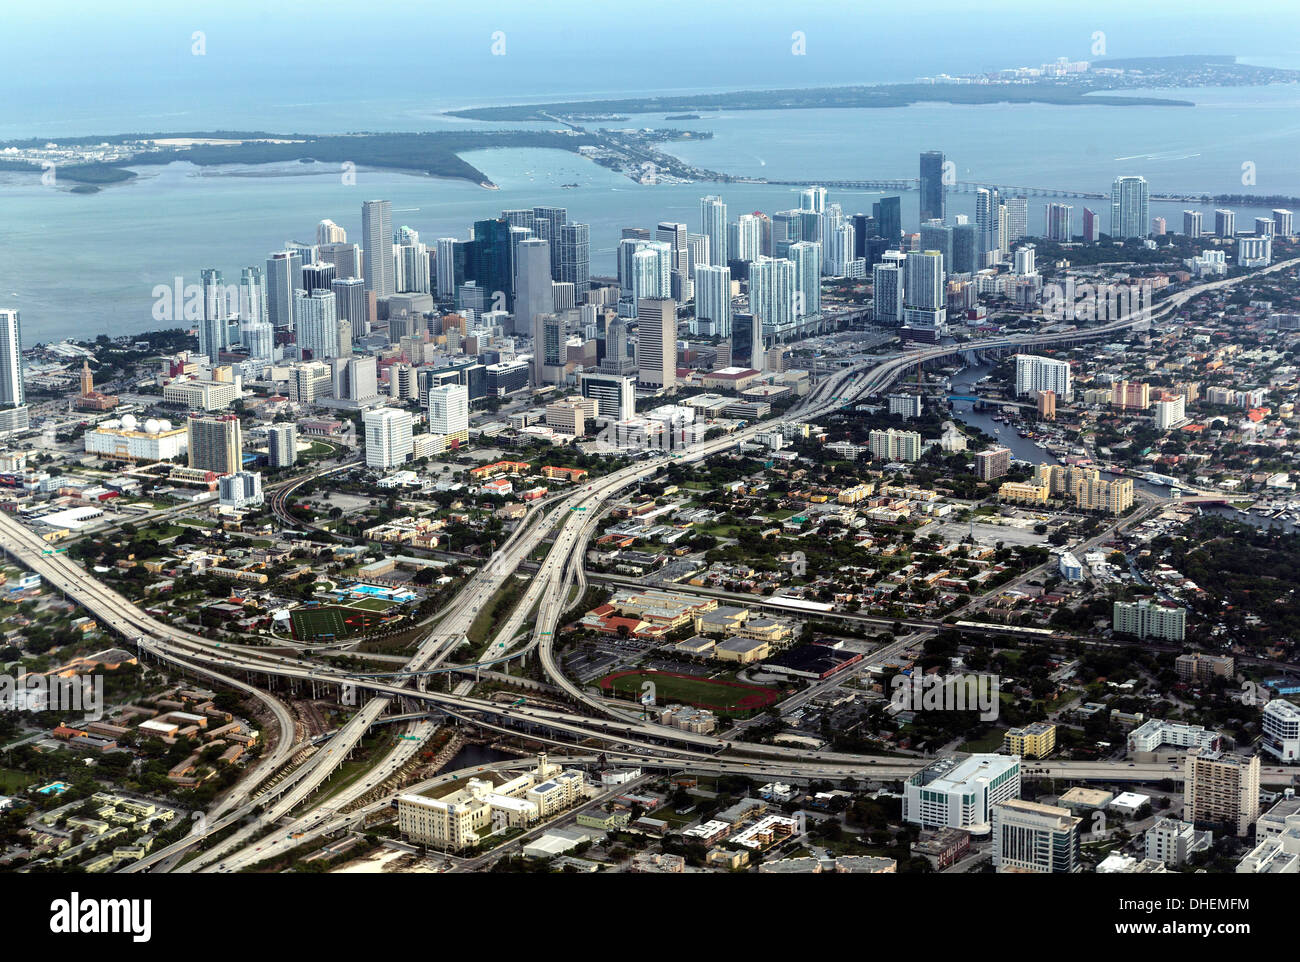 Vista aérea de Miami, Florida, Estados Unidos de América, América del Norte Foto de stock